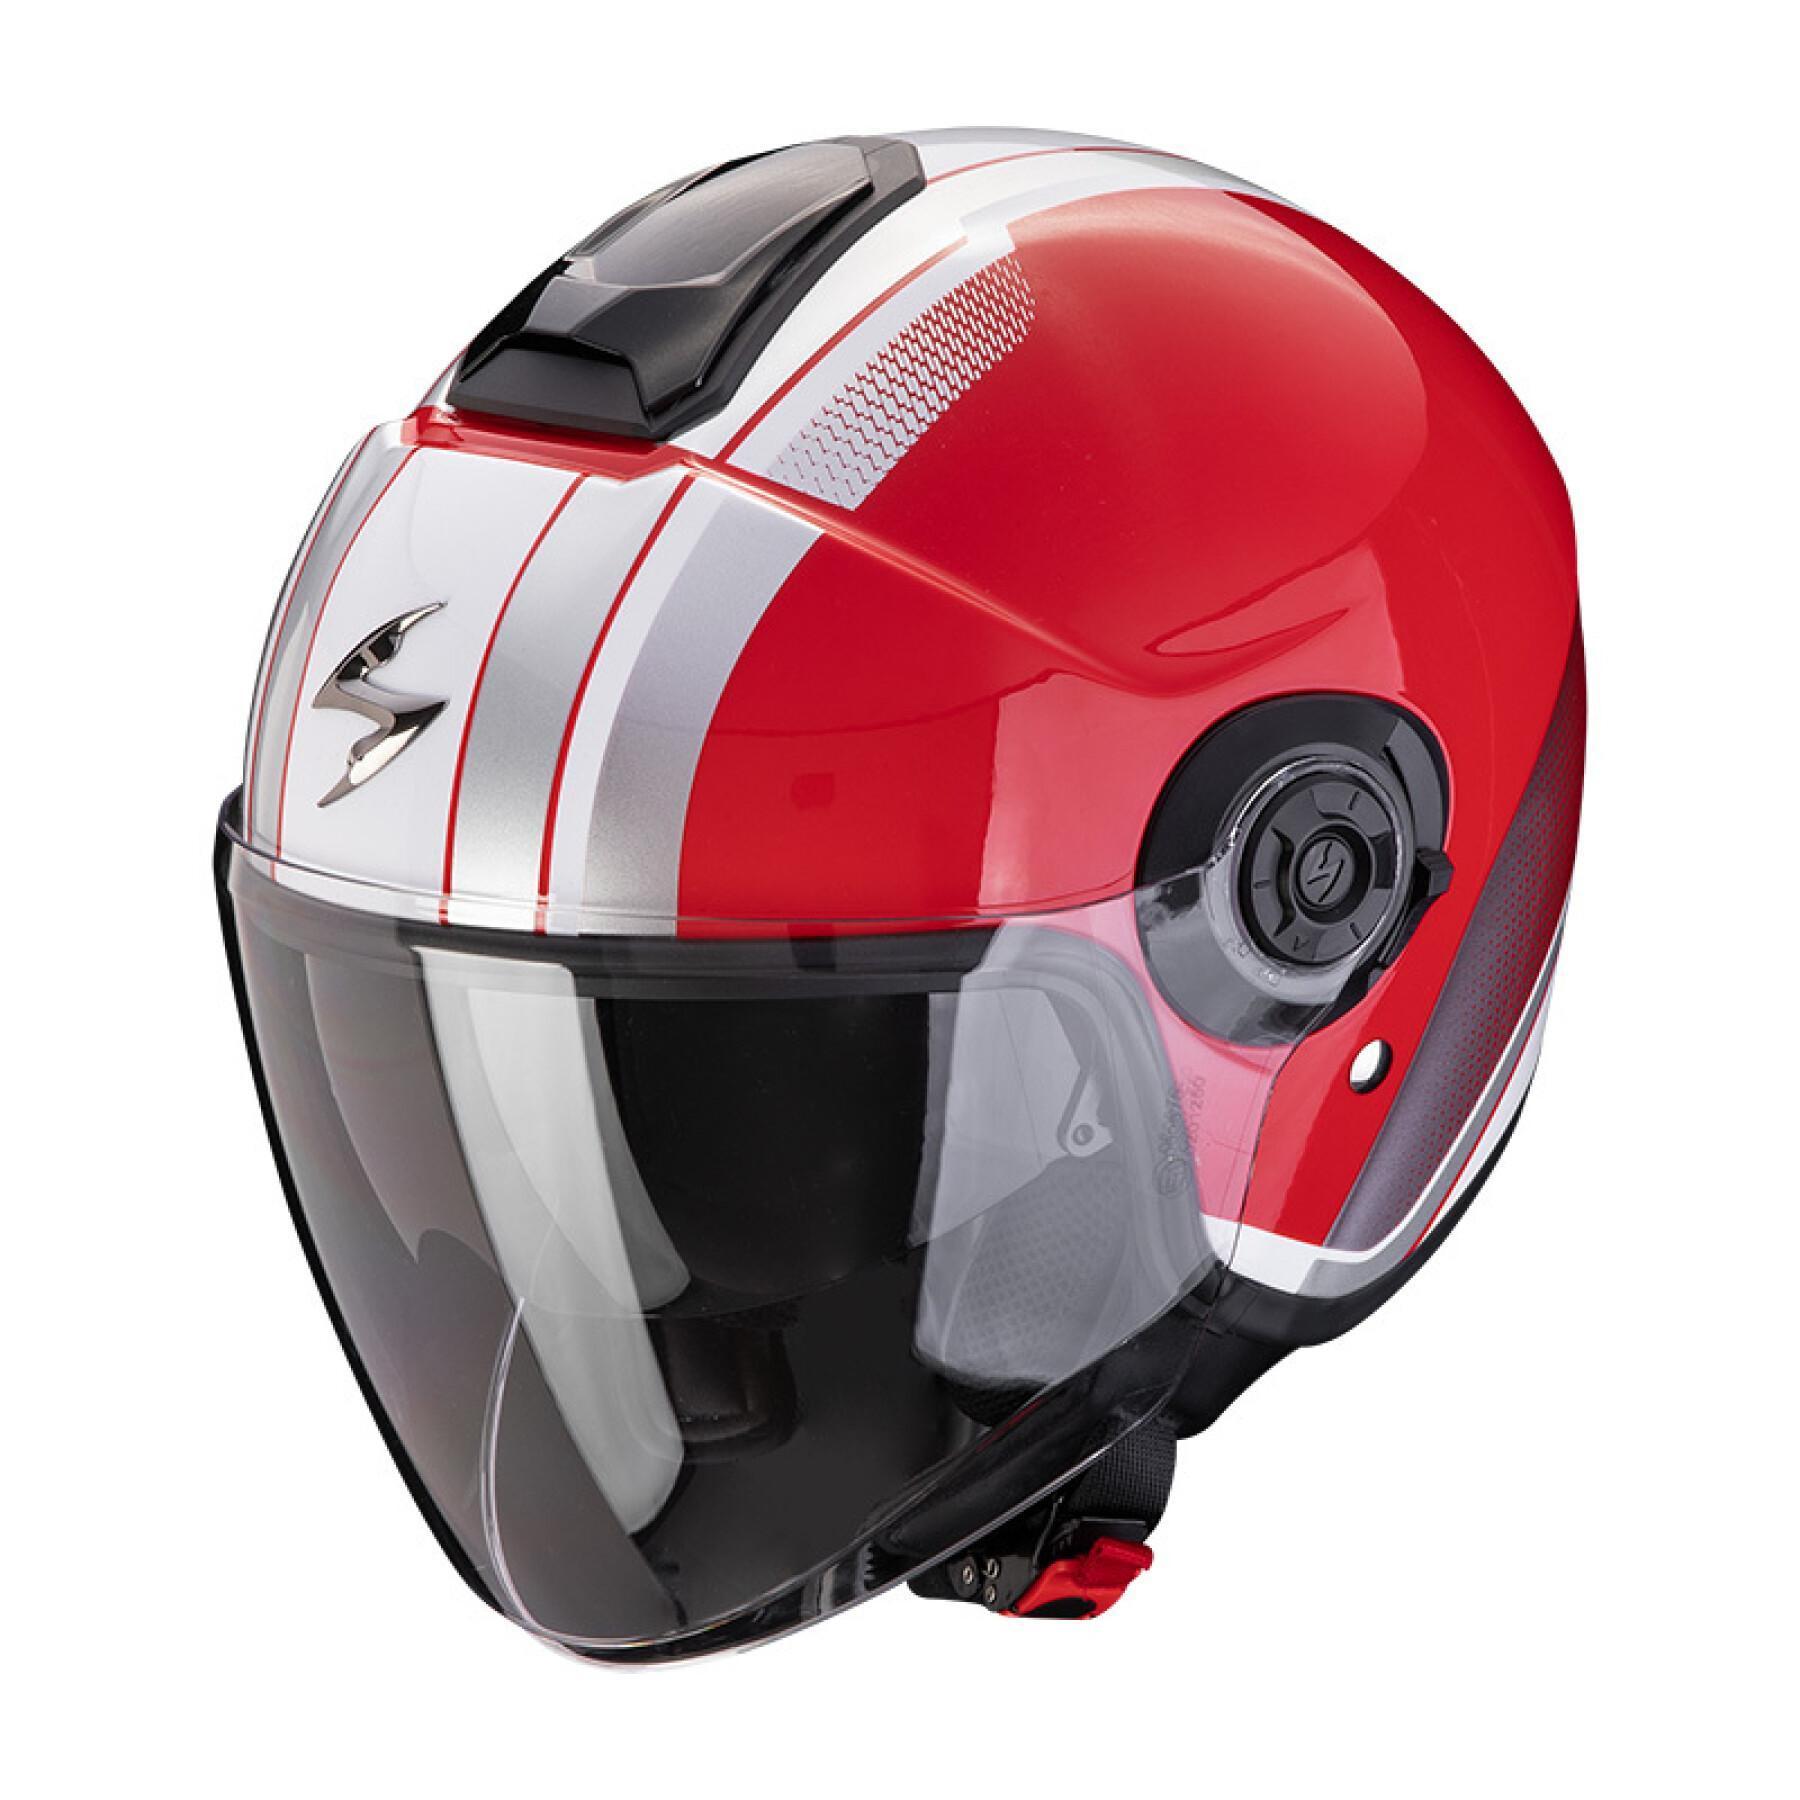 Jet motorcycle helmet Scorpion Exo-city II Mall